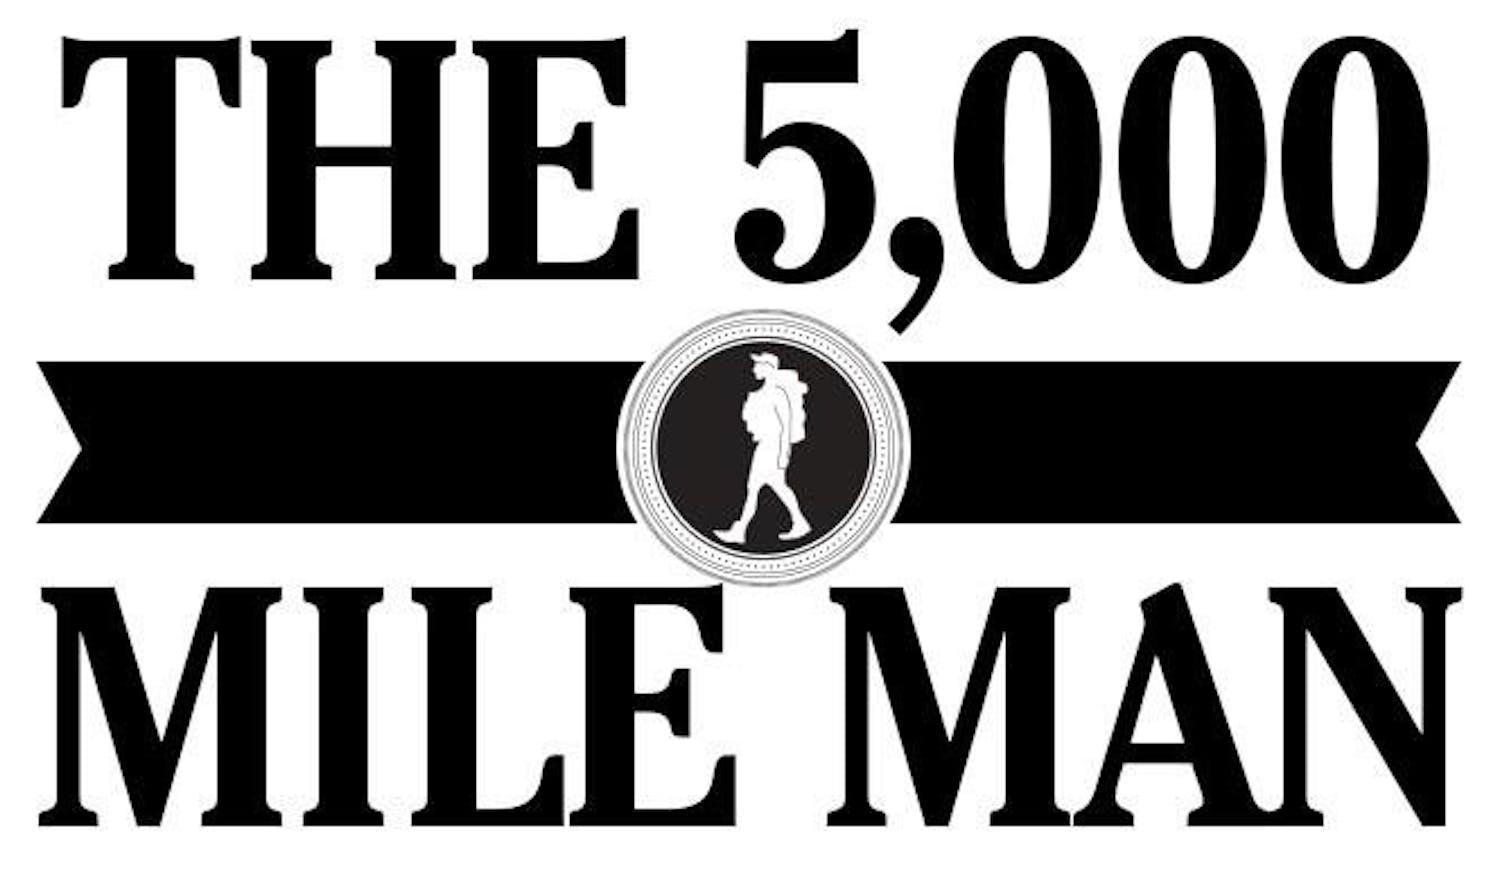 5,000 mile man